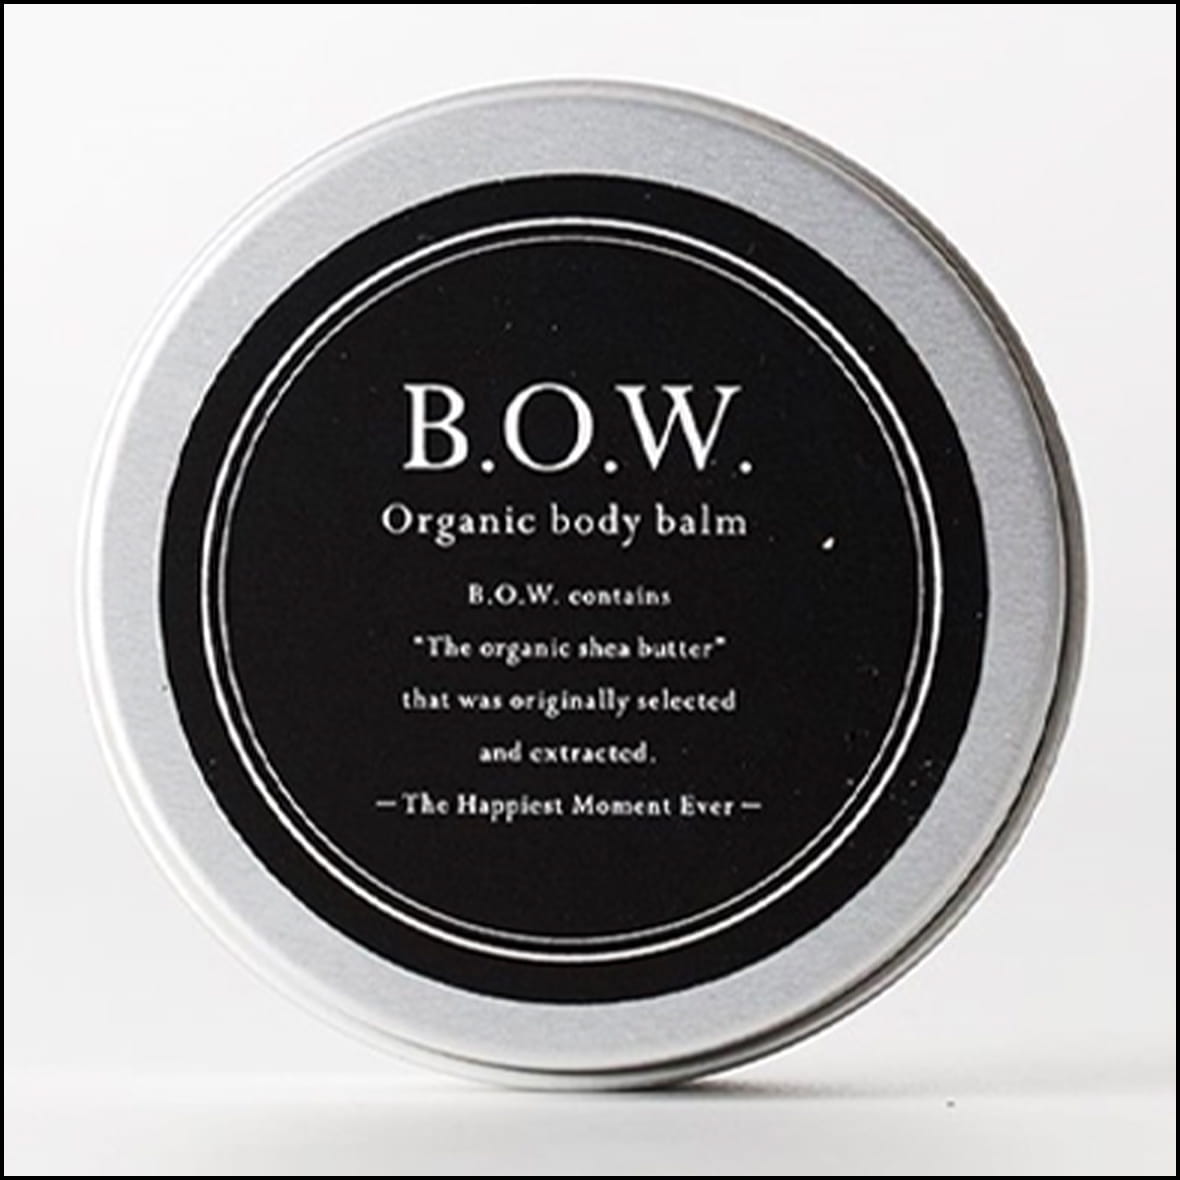 B.O.W. organic body balm